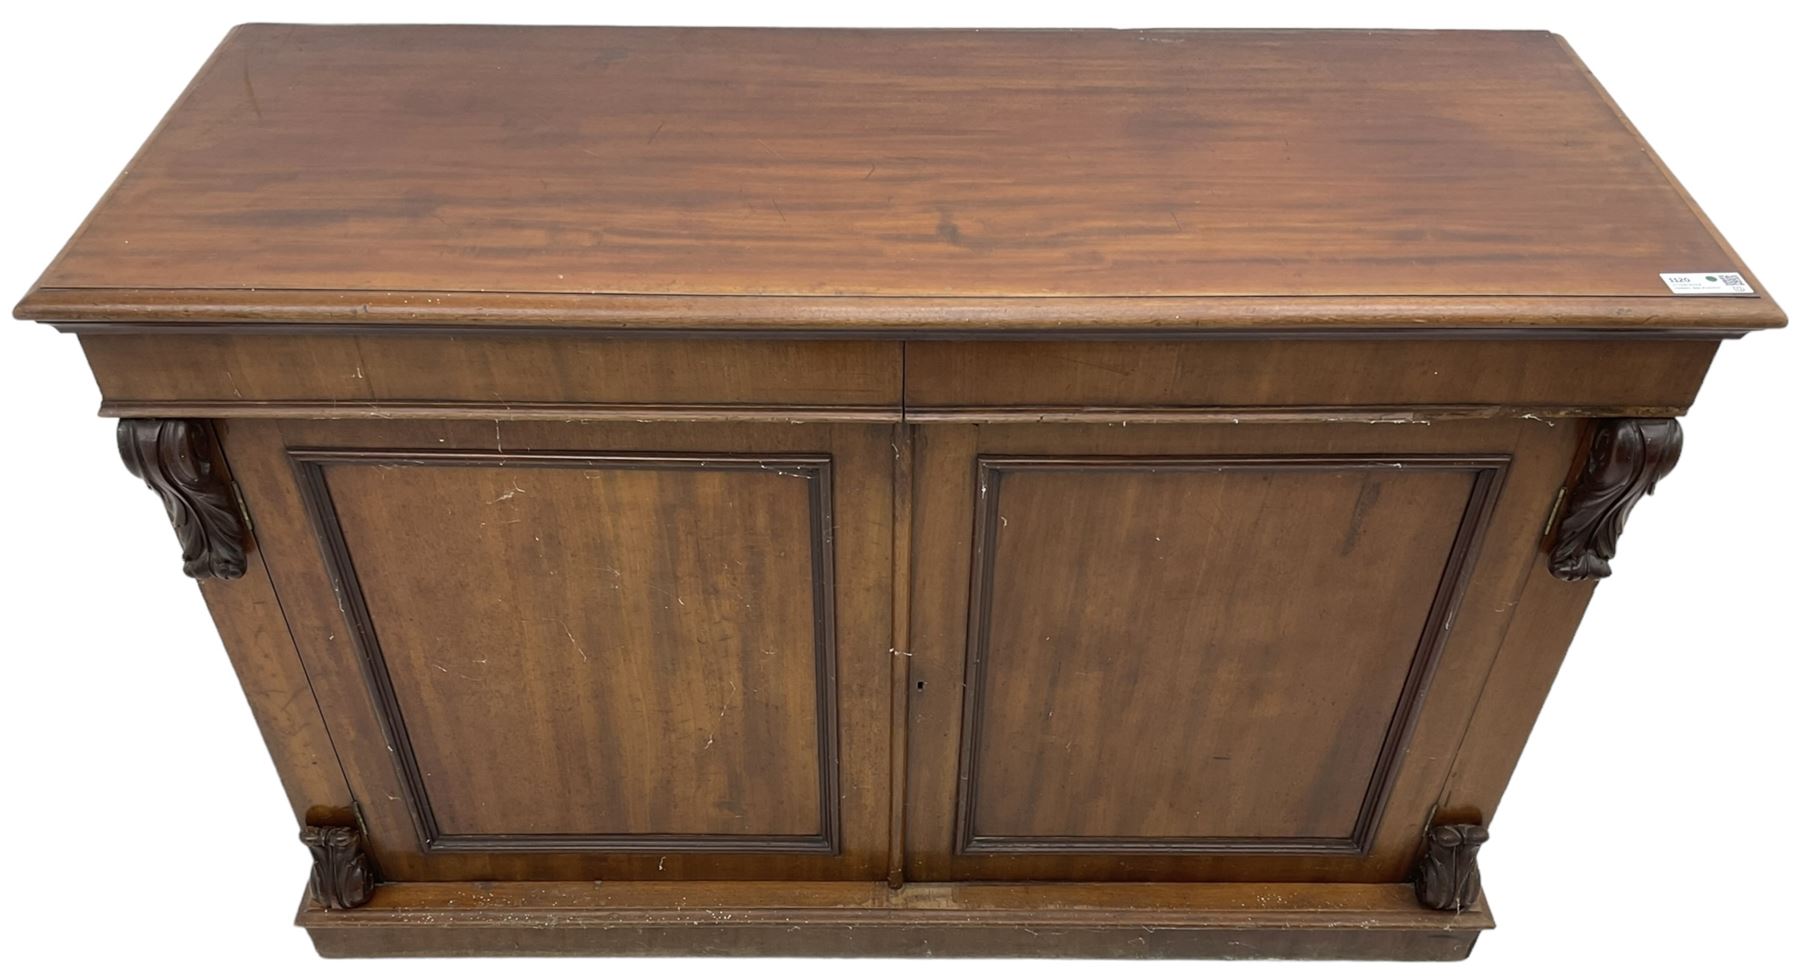 Early 19th century mahogany chiffonier sideboard - Image 3 of 9